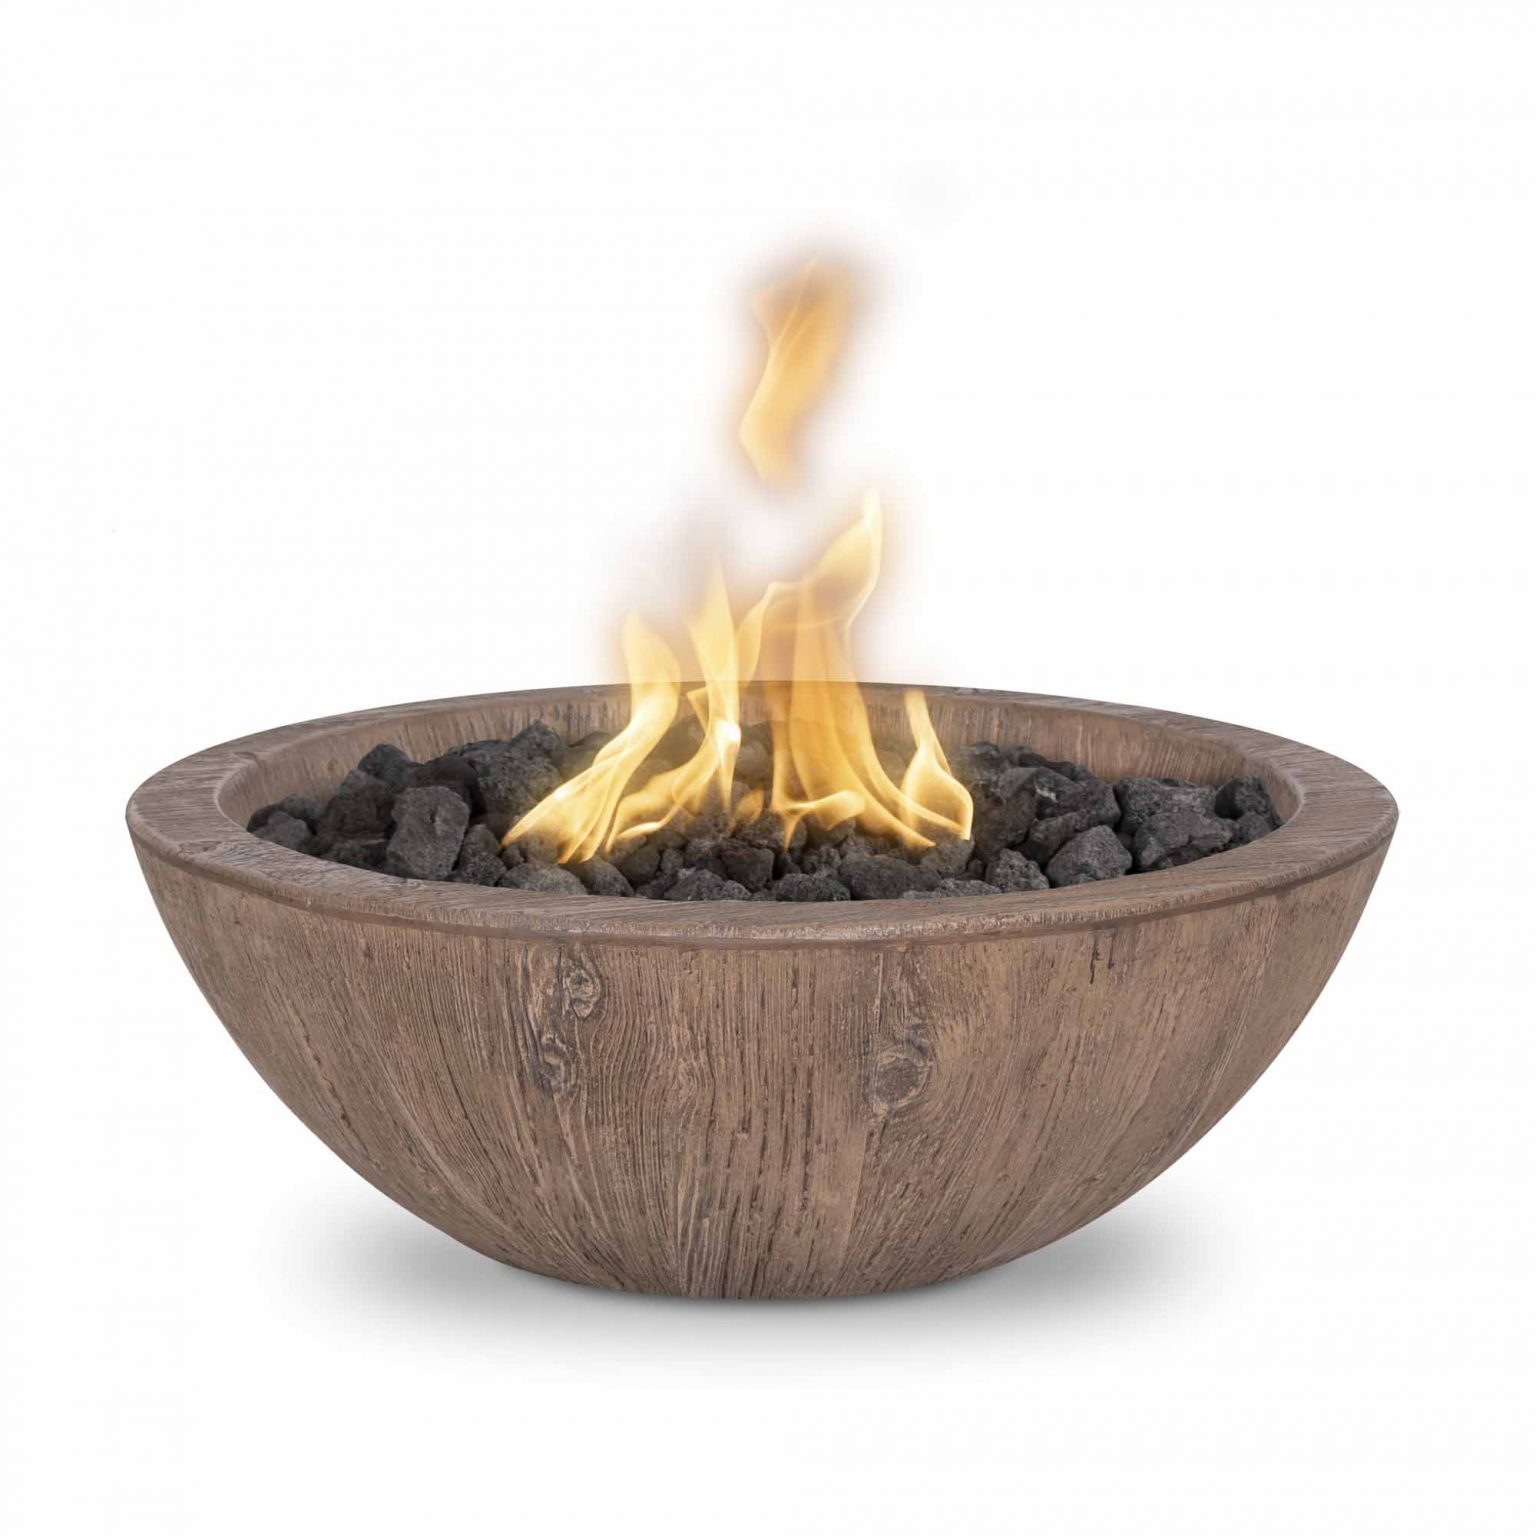 Woodgrain Sedona Gas Fire Bowl 27 inch from The Outdoor Plus (Wood Grain Finish: Oak - OAK, TOP Ignition: Match Light)